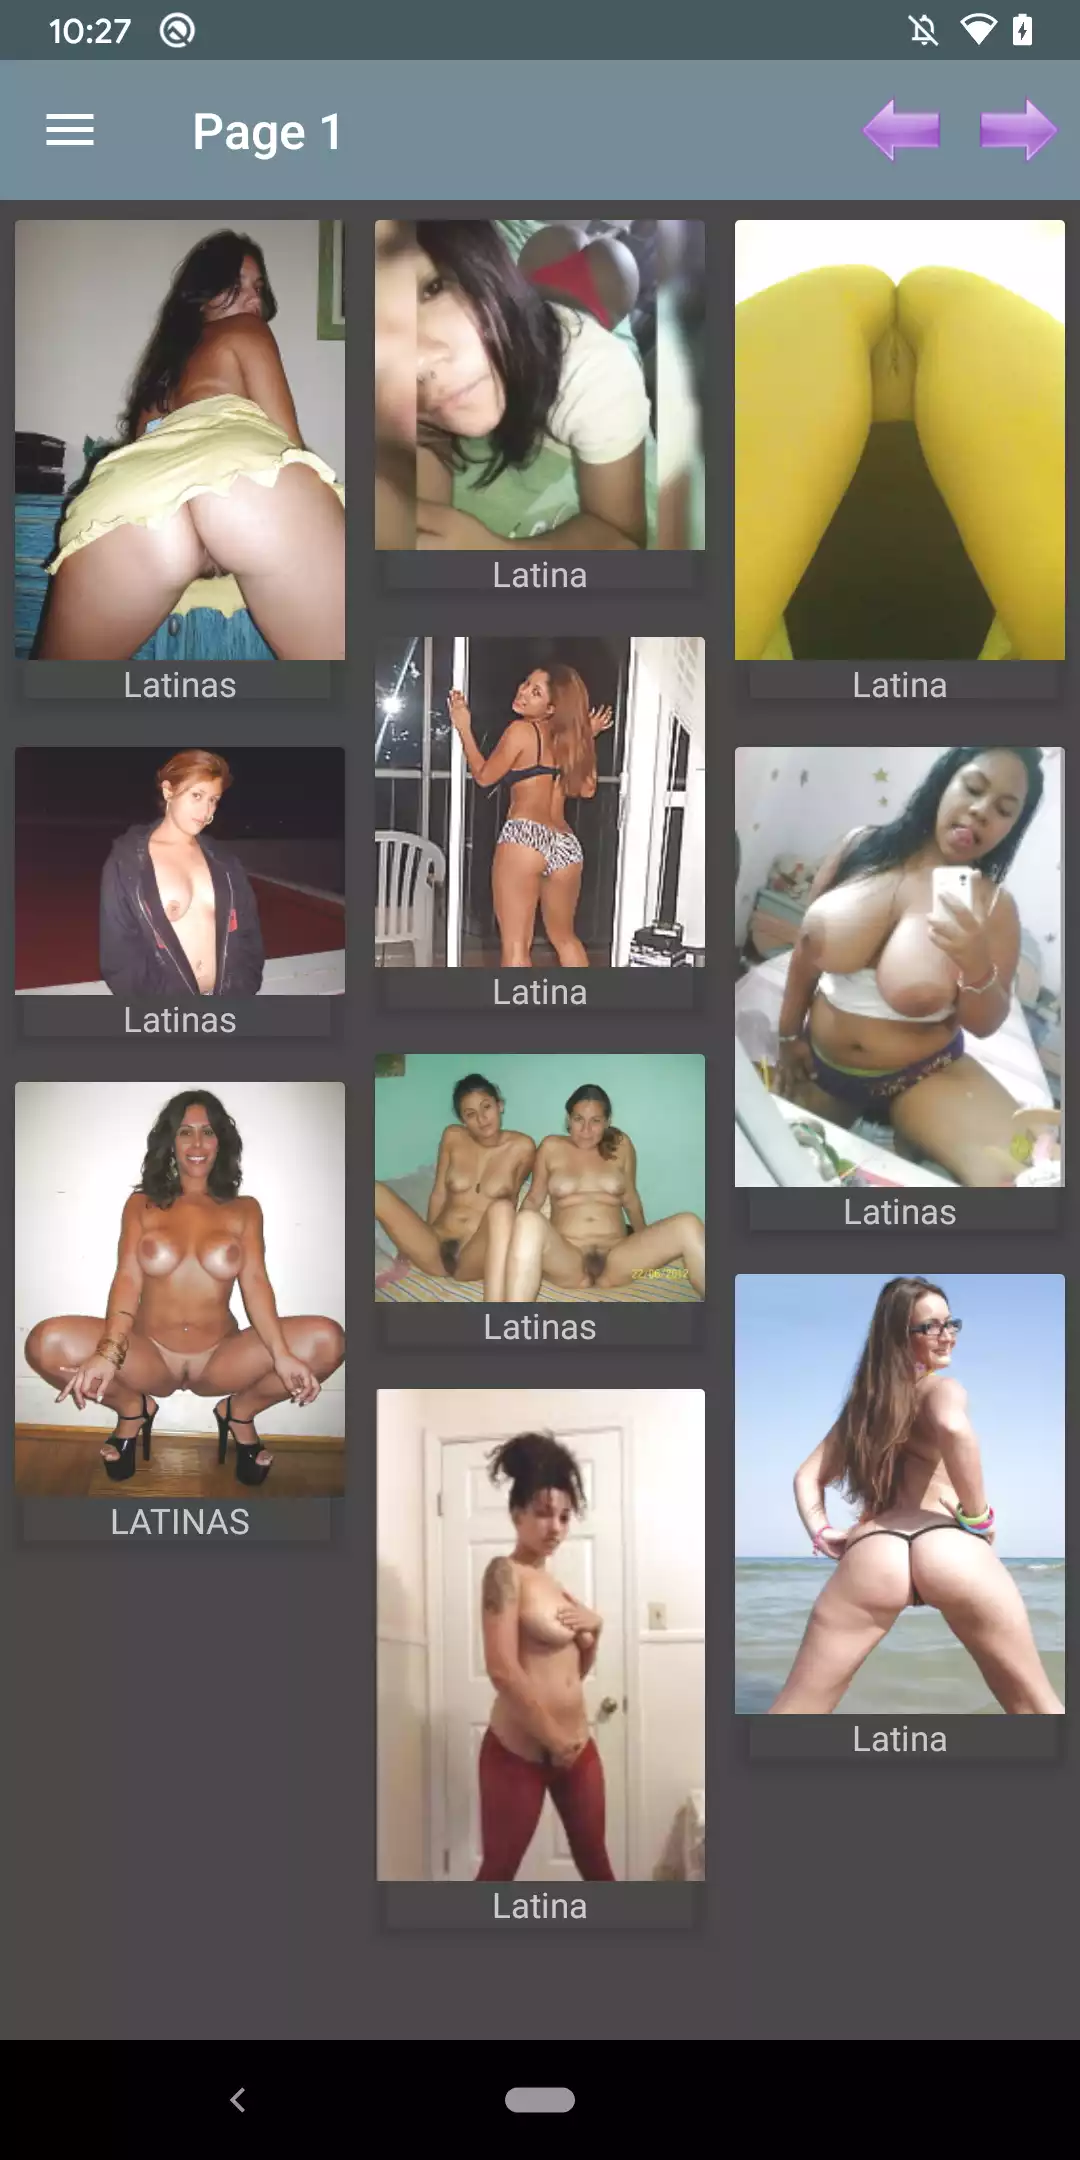 Latina Pics anime,hetai,latina,apps,black,pornstars,pornstar,android,erotic,hot,adult,brasil,pictures,app,comics,mexican,galleries,apk,porn,picture,sexy,dance,mature,hentai,download,pics